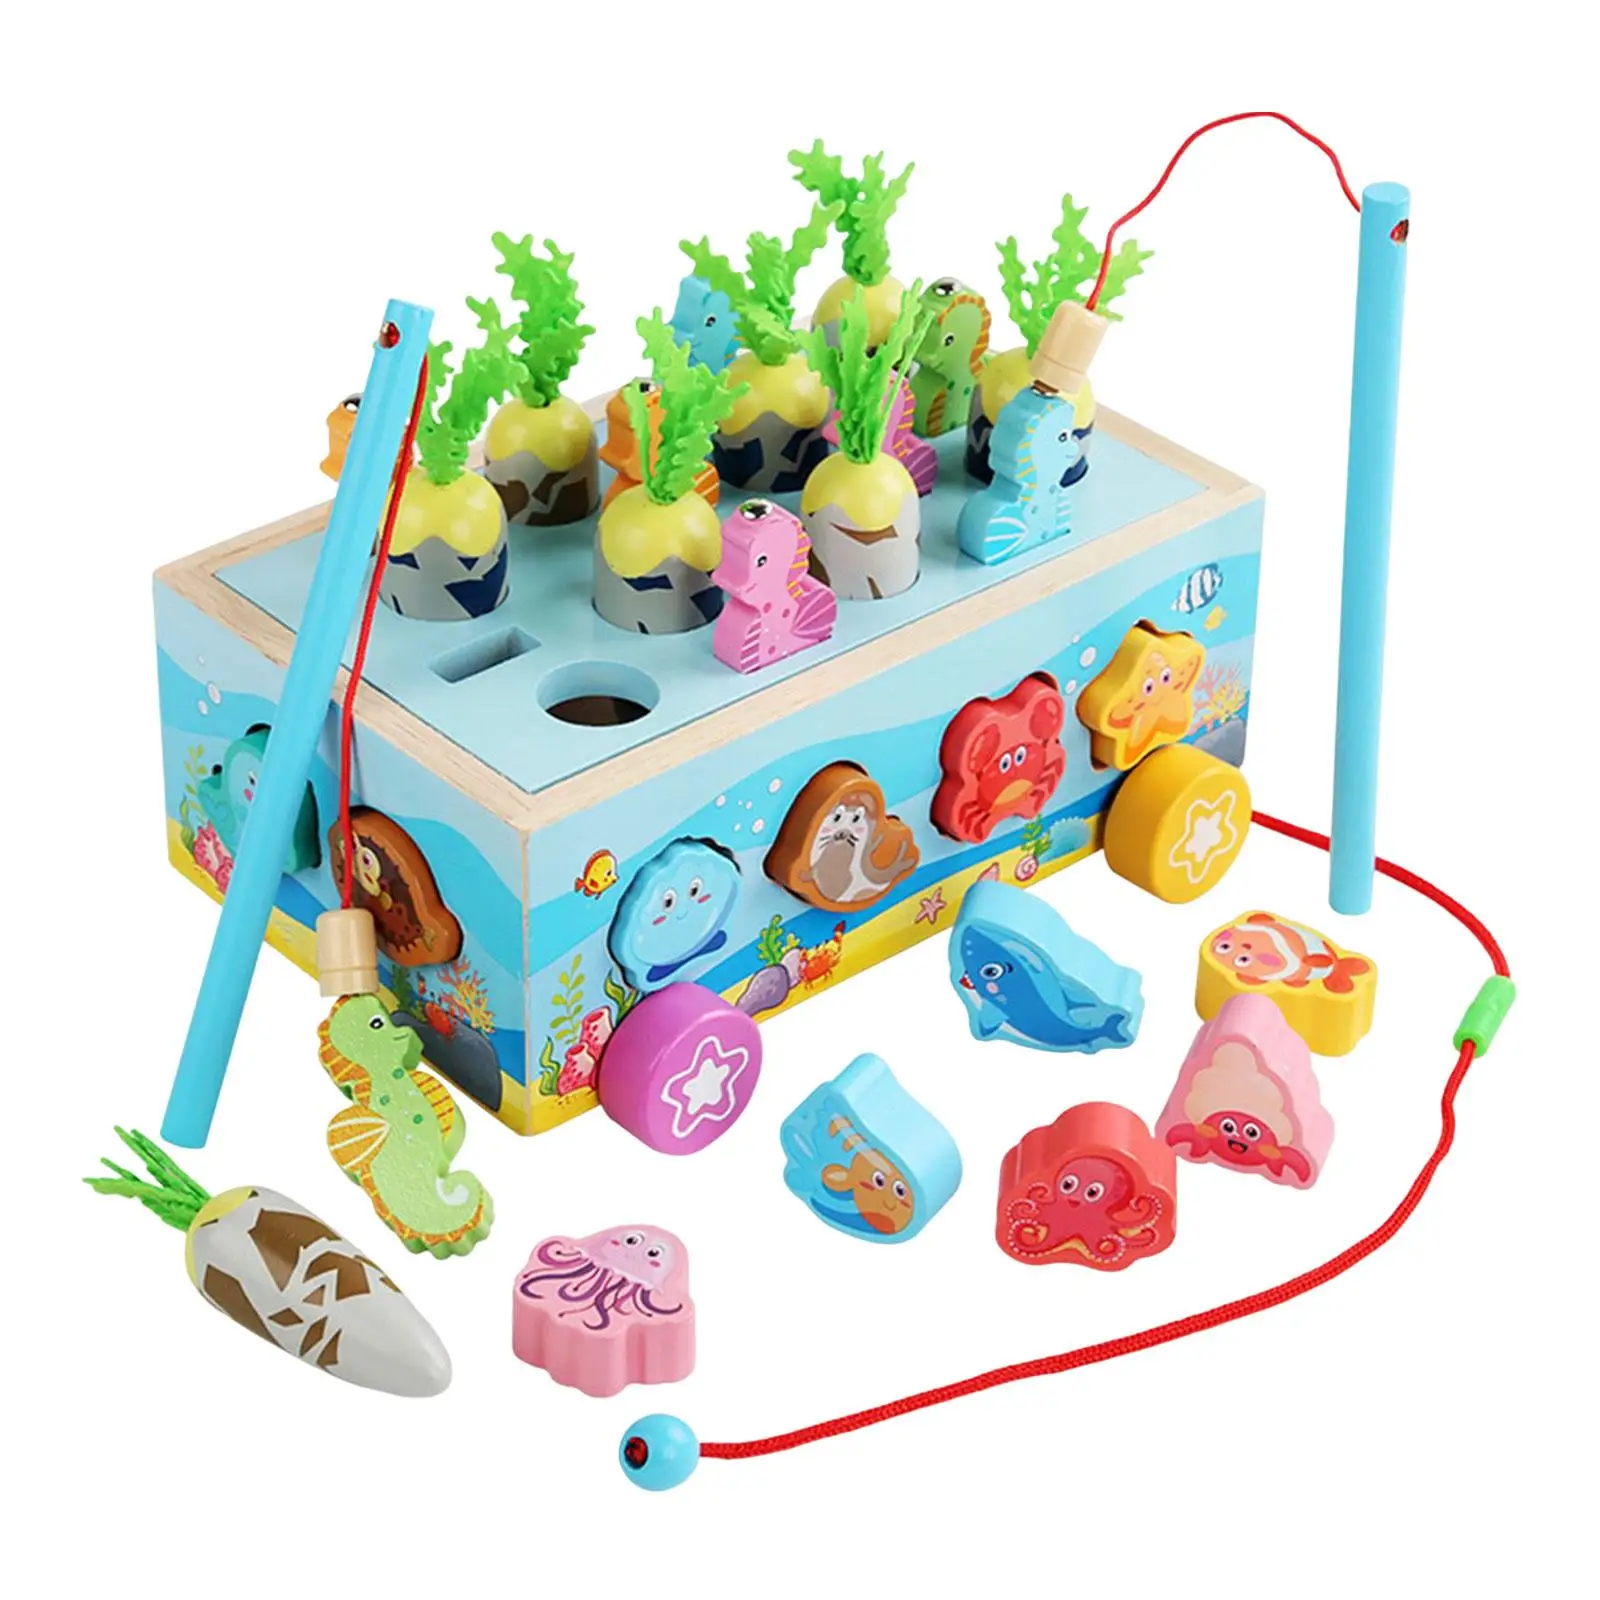 Montessori Wooden Shape Sorter Toys Preschool Learning Toys Fishing Game Car with Animal Blocks for Toddler Kids Birthday Gift